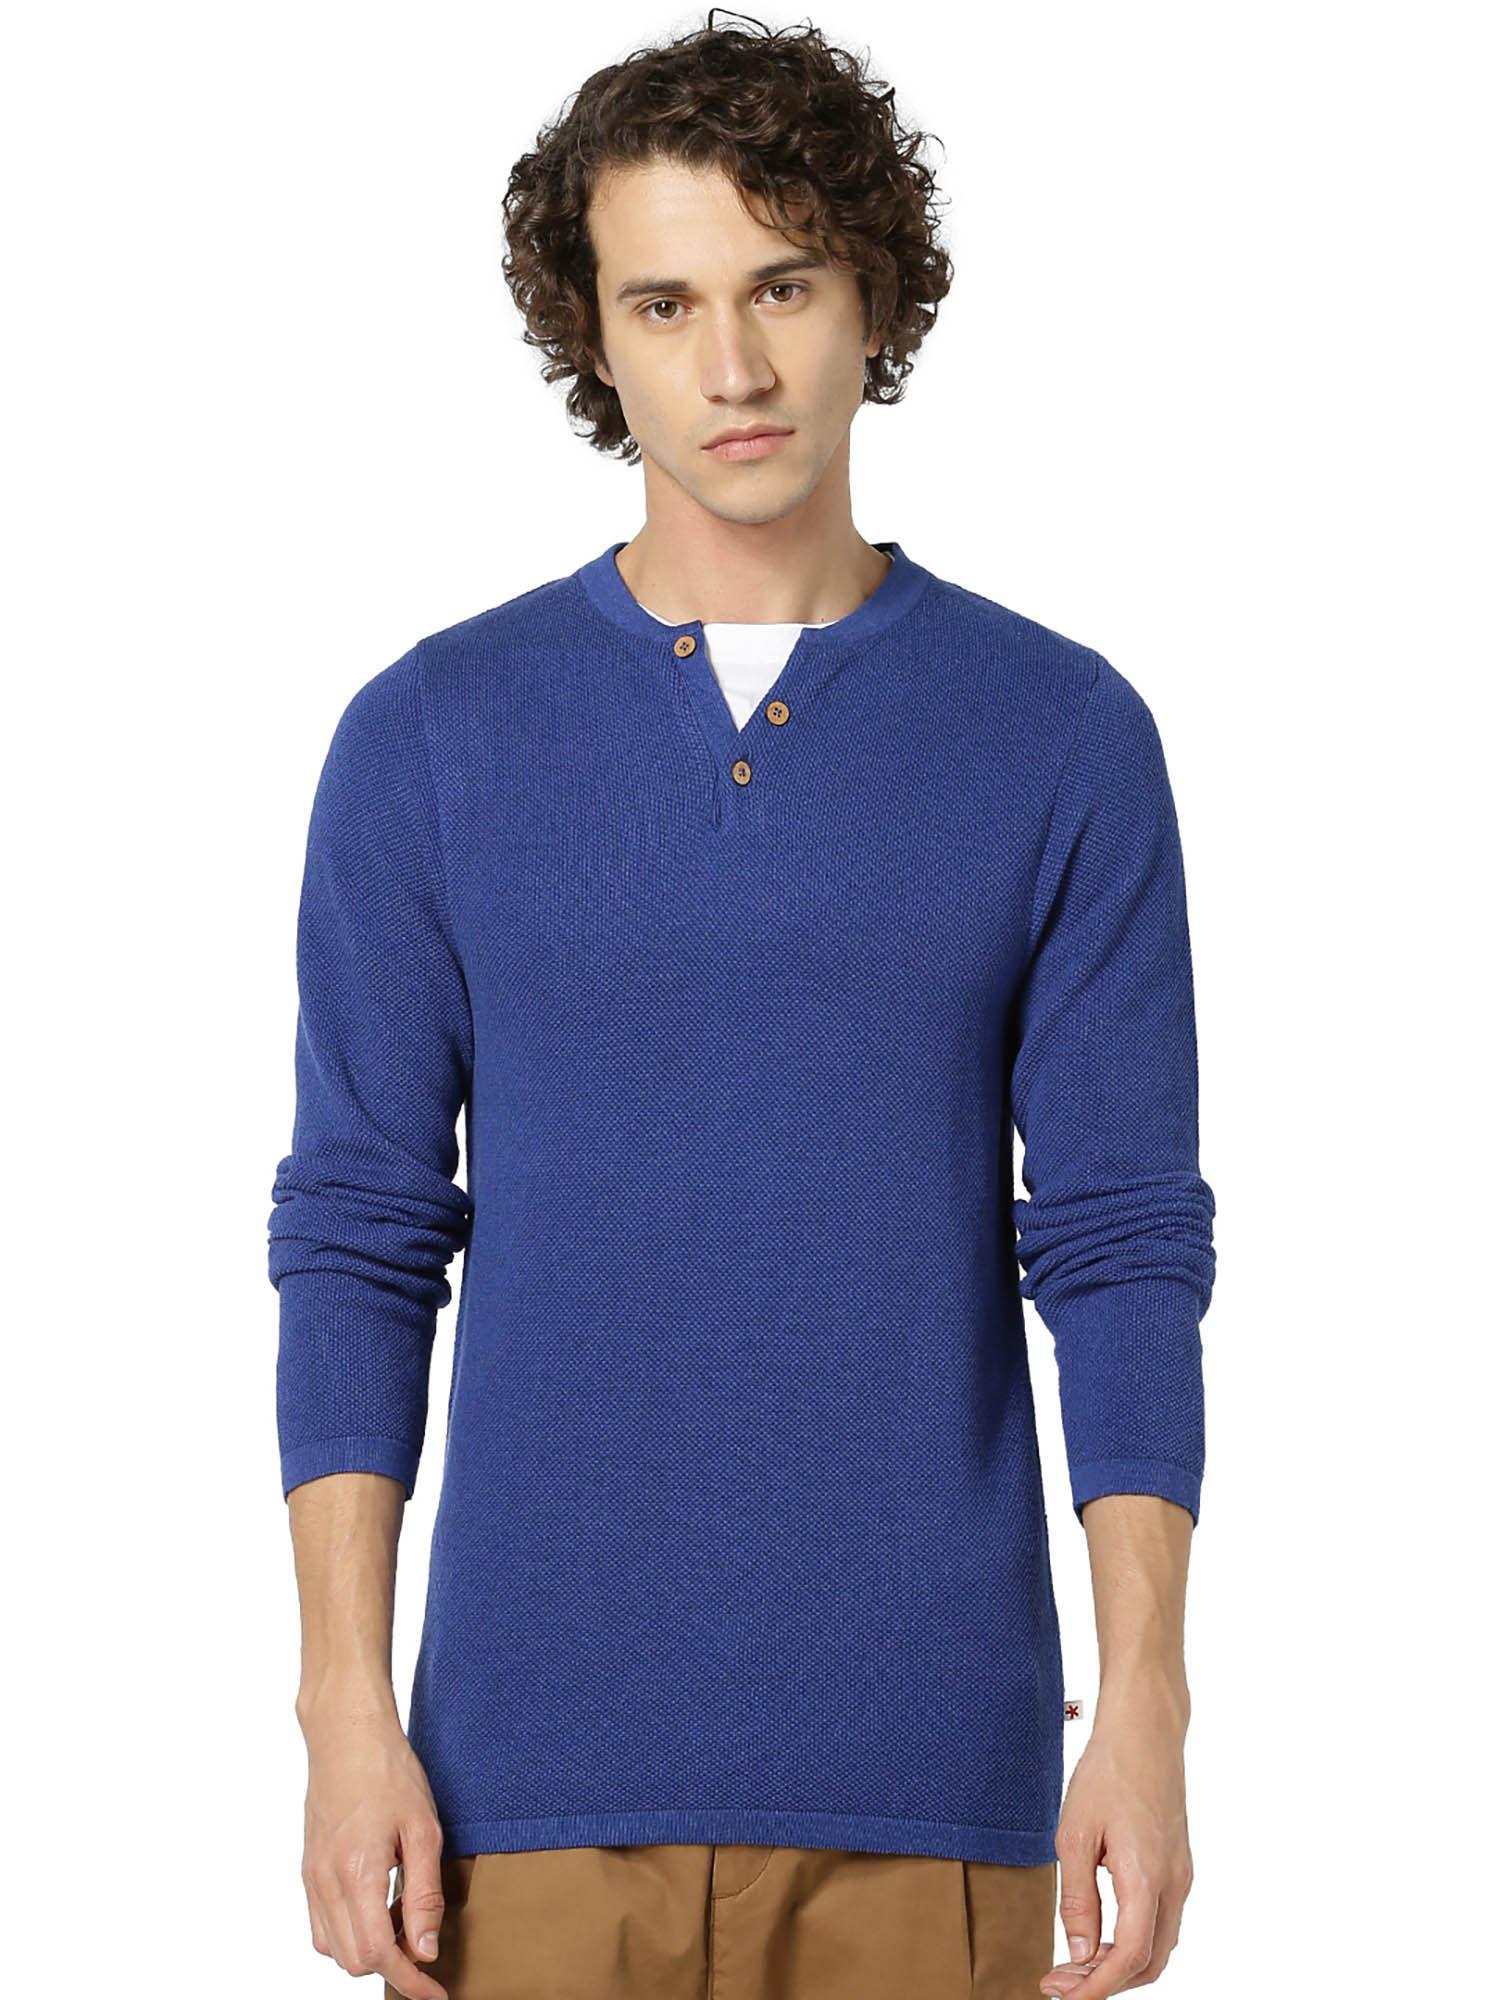 blue textured sweater